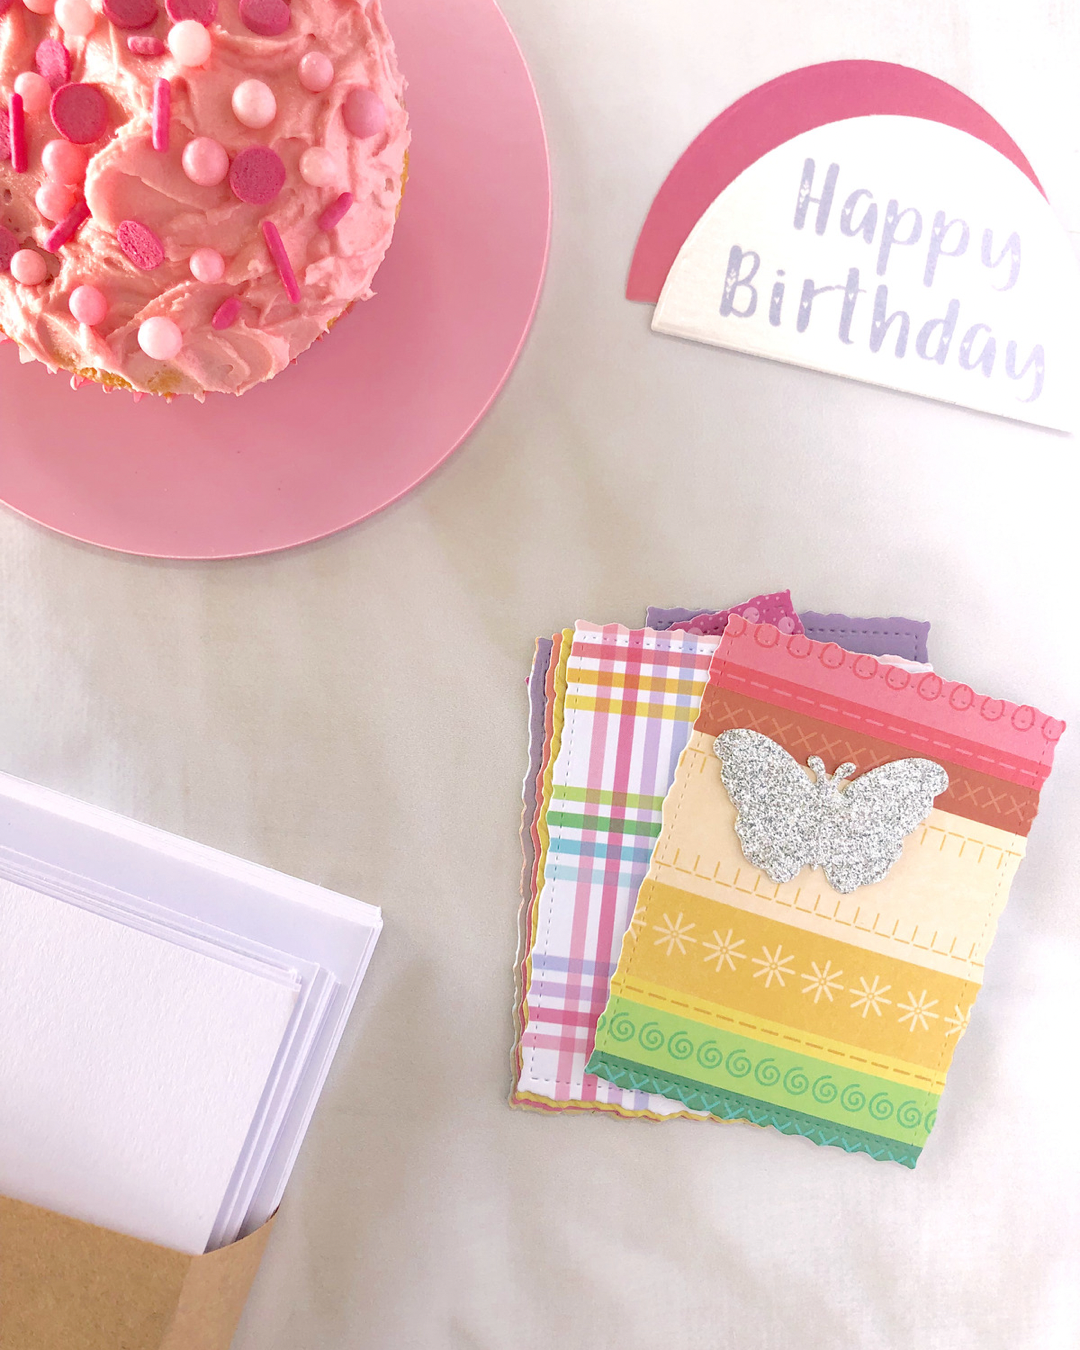 The Birthday Card Craft Kit